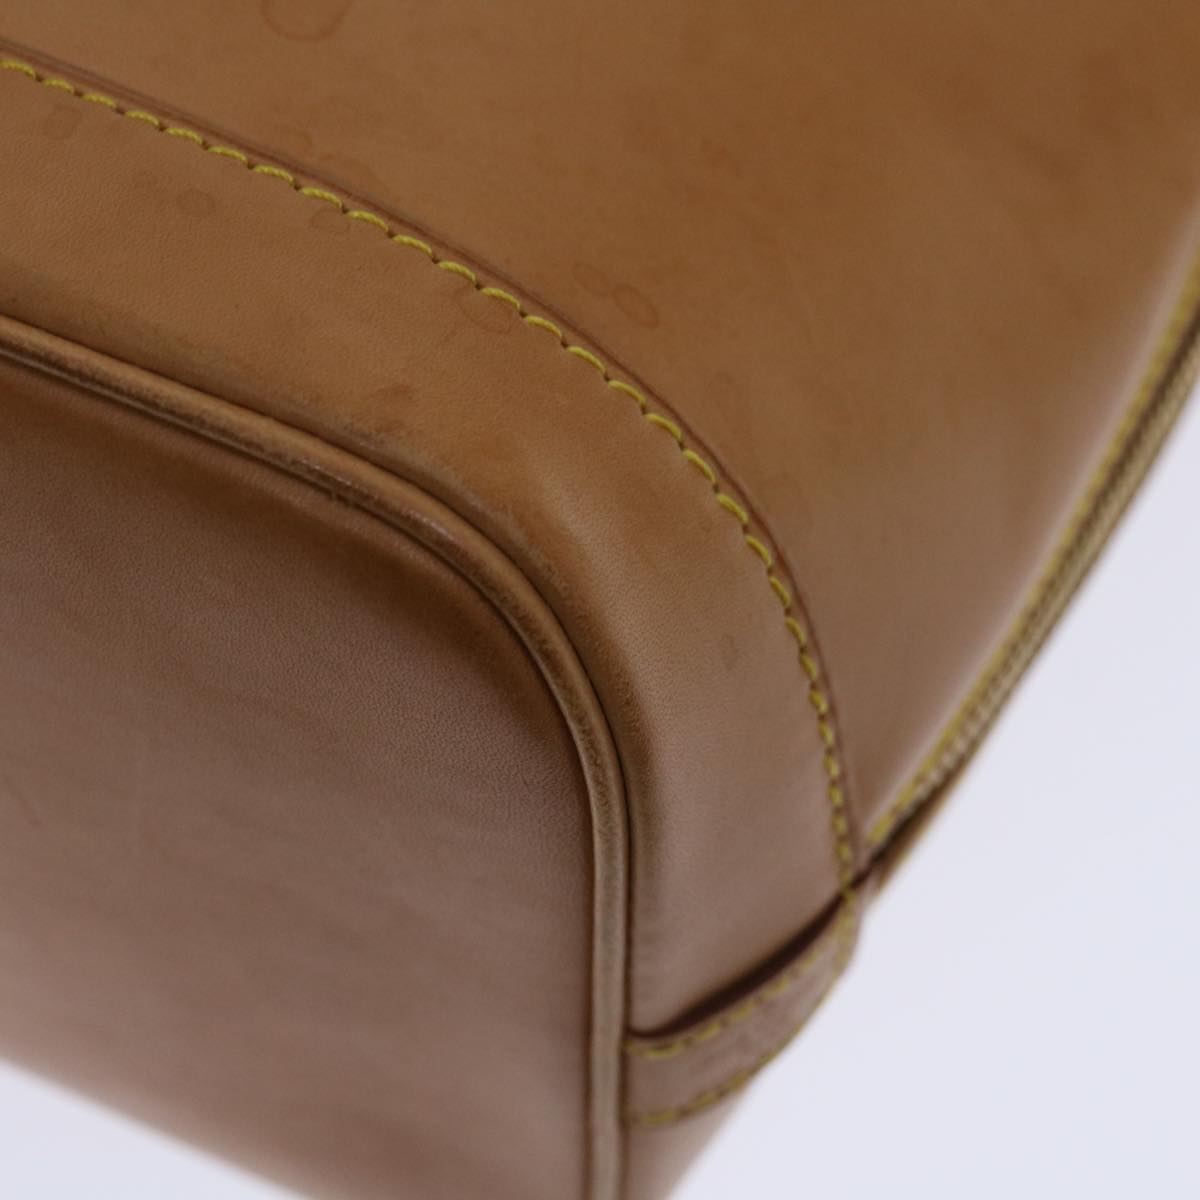 LOUIS VUITTON Nomad leather Alma Hand Bag Beige M85000 LV Auth 68744